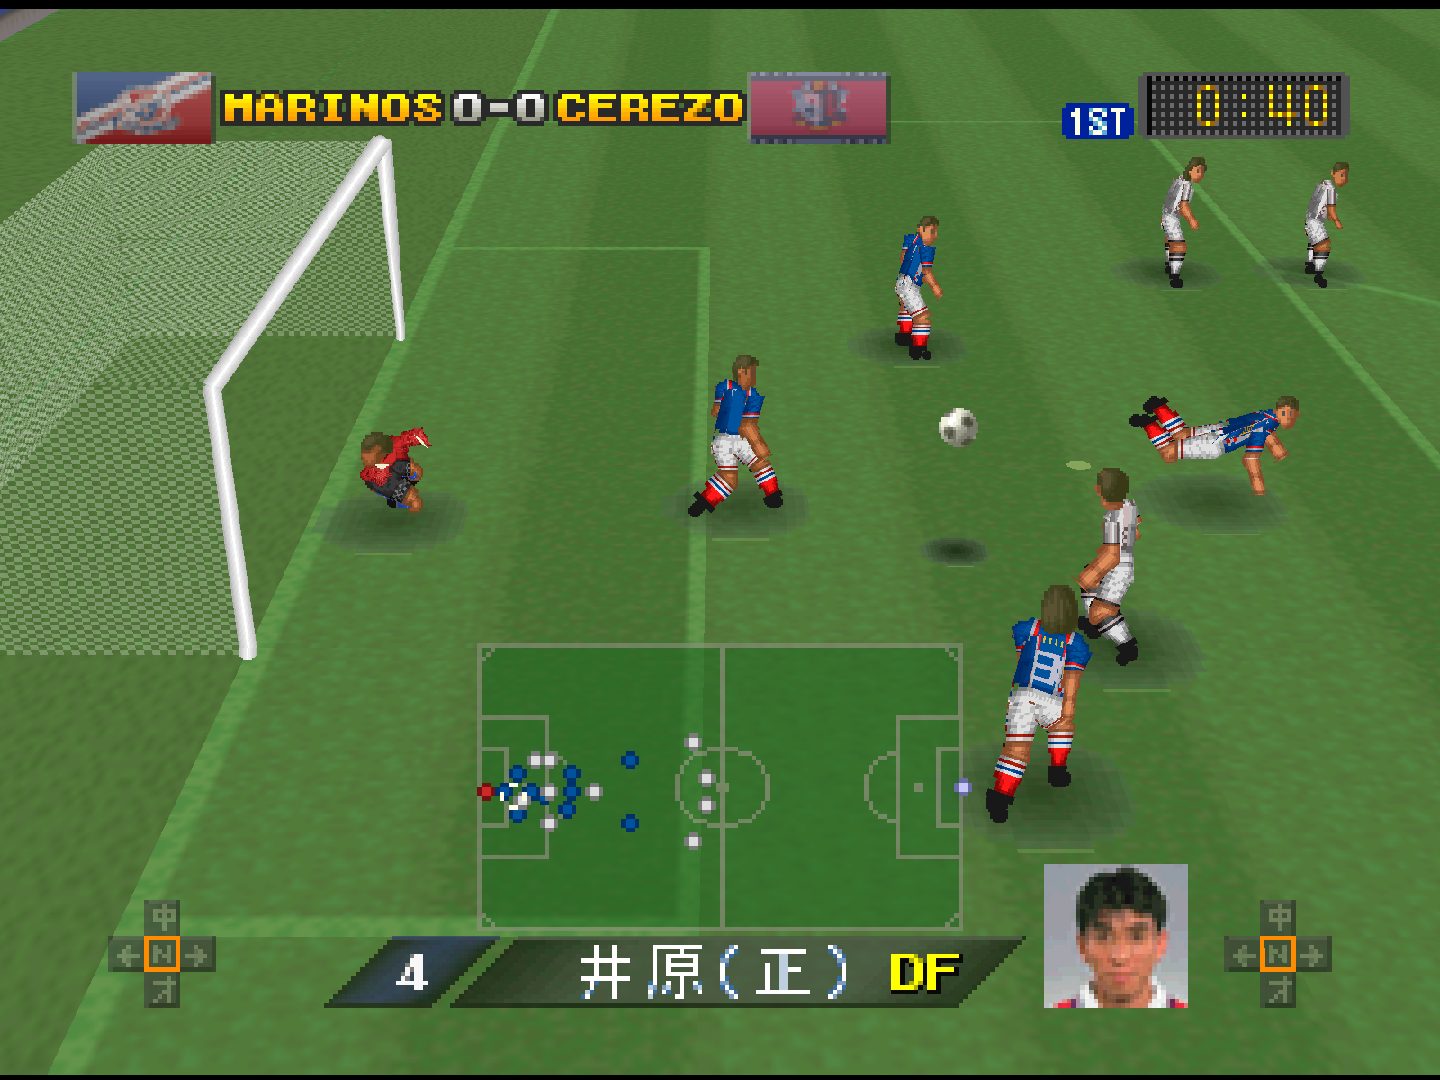 J.League Dynamite Soccer 64